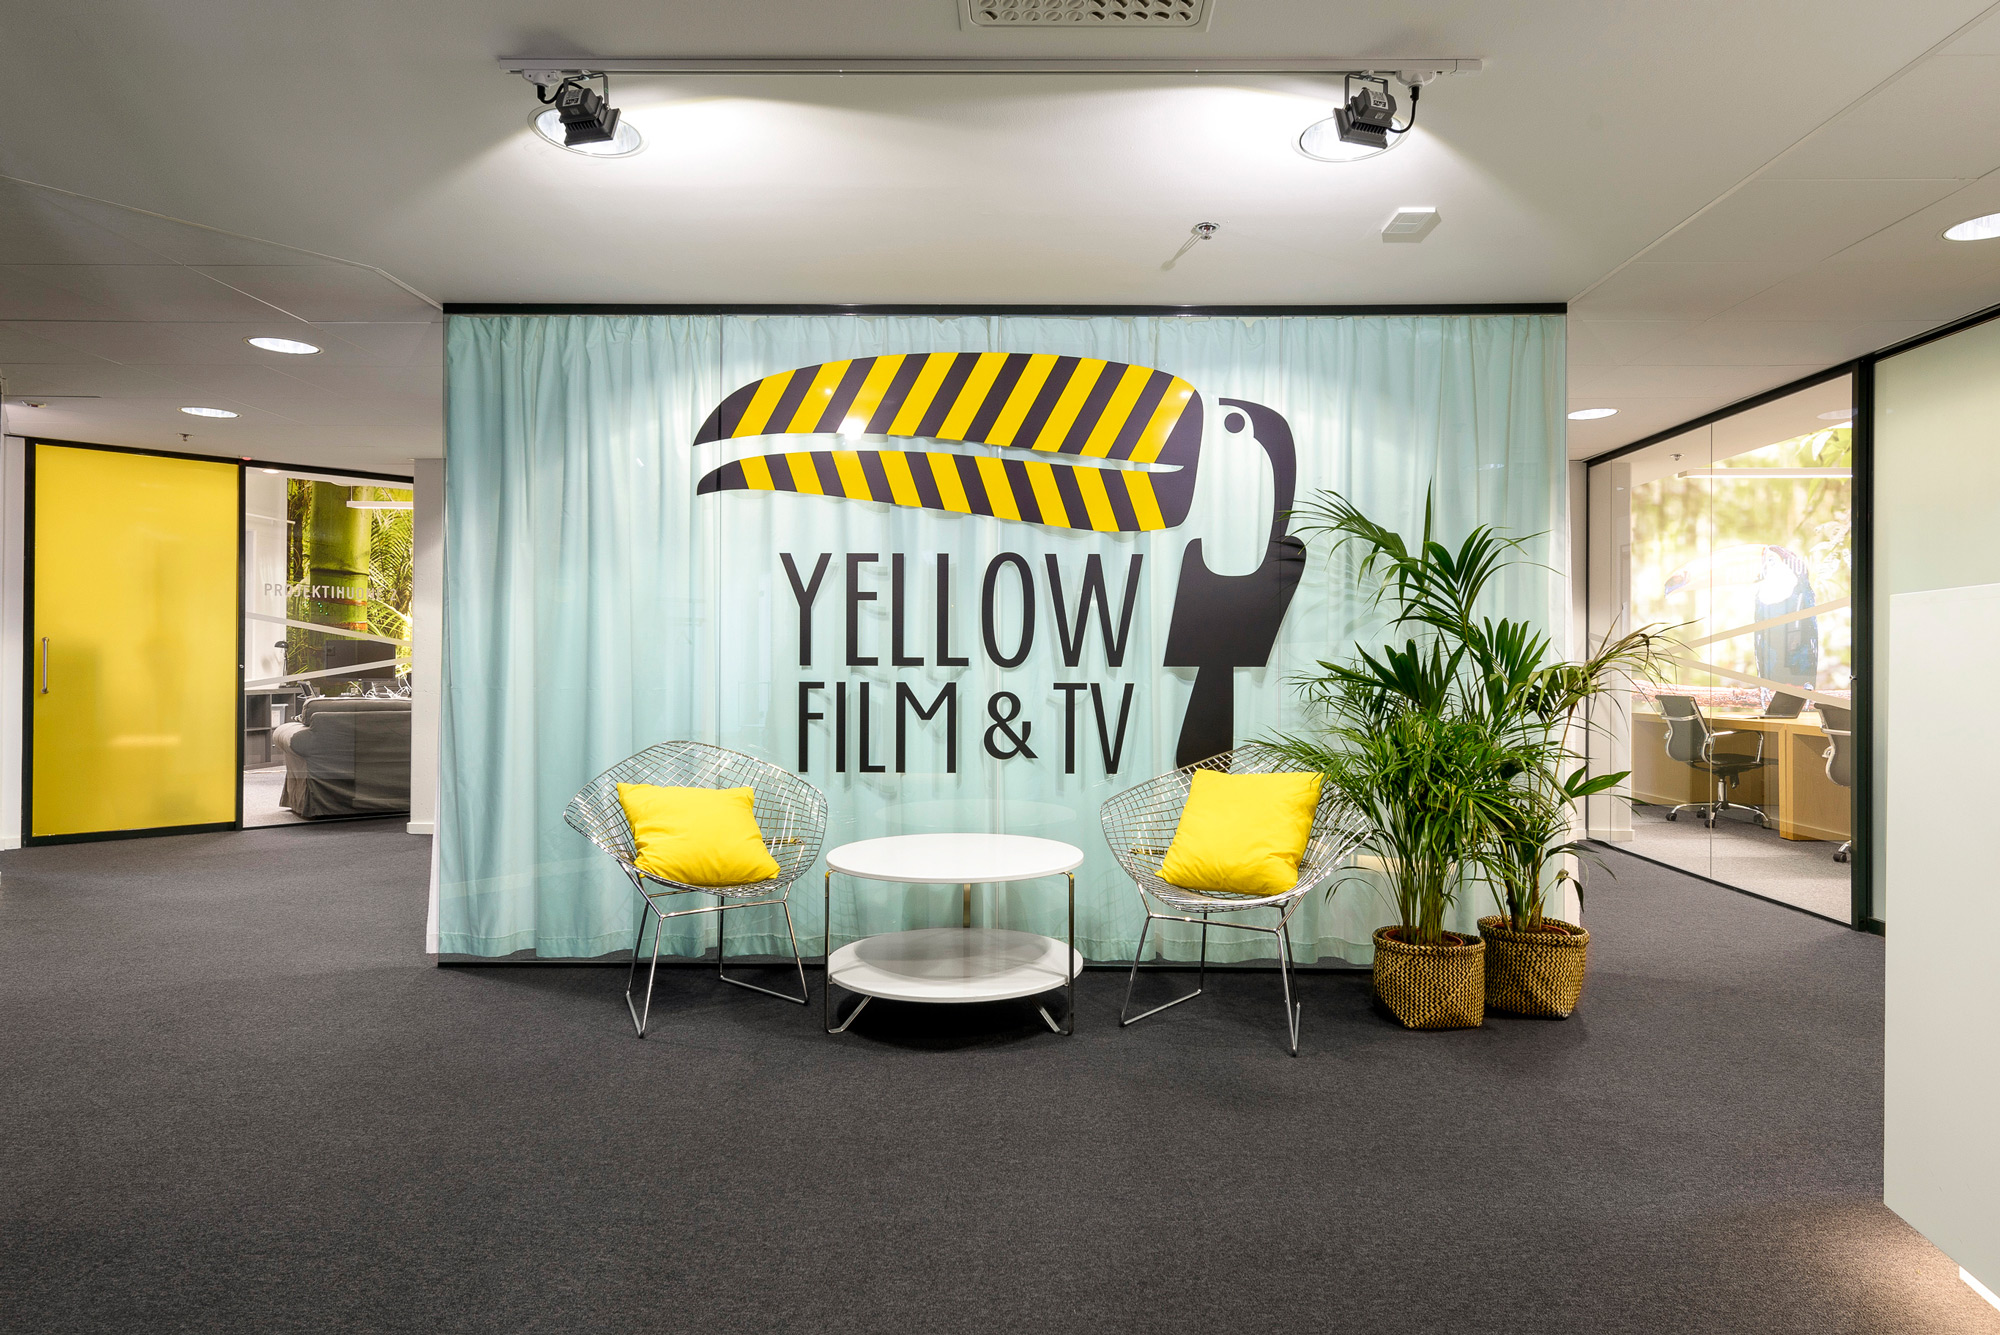 Yellow Film & TV entrance